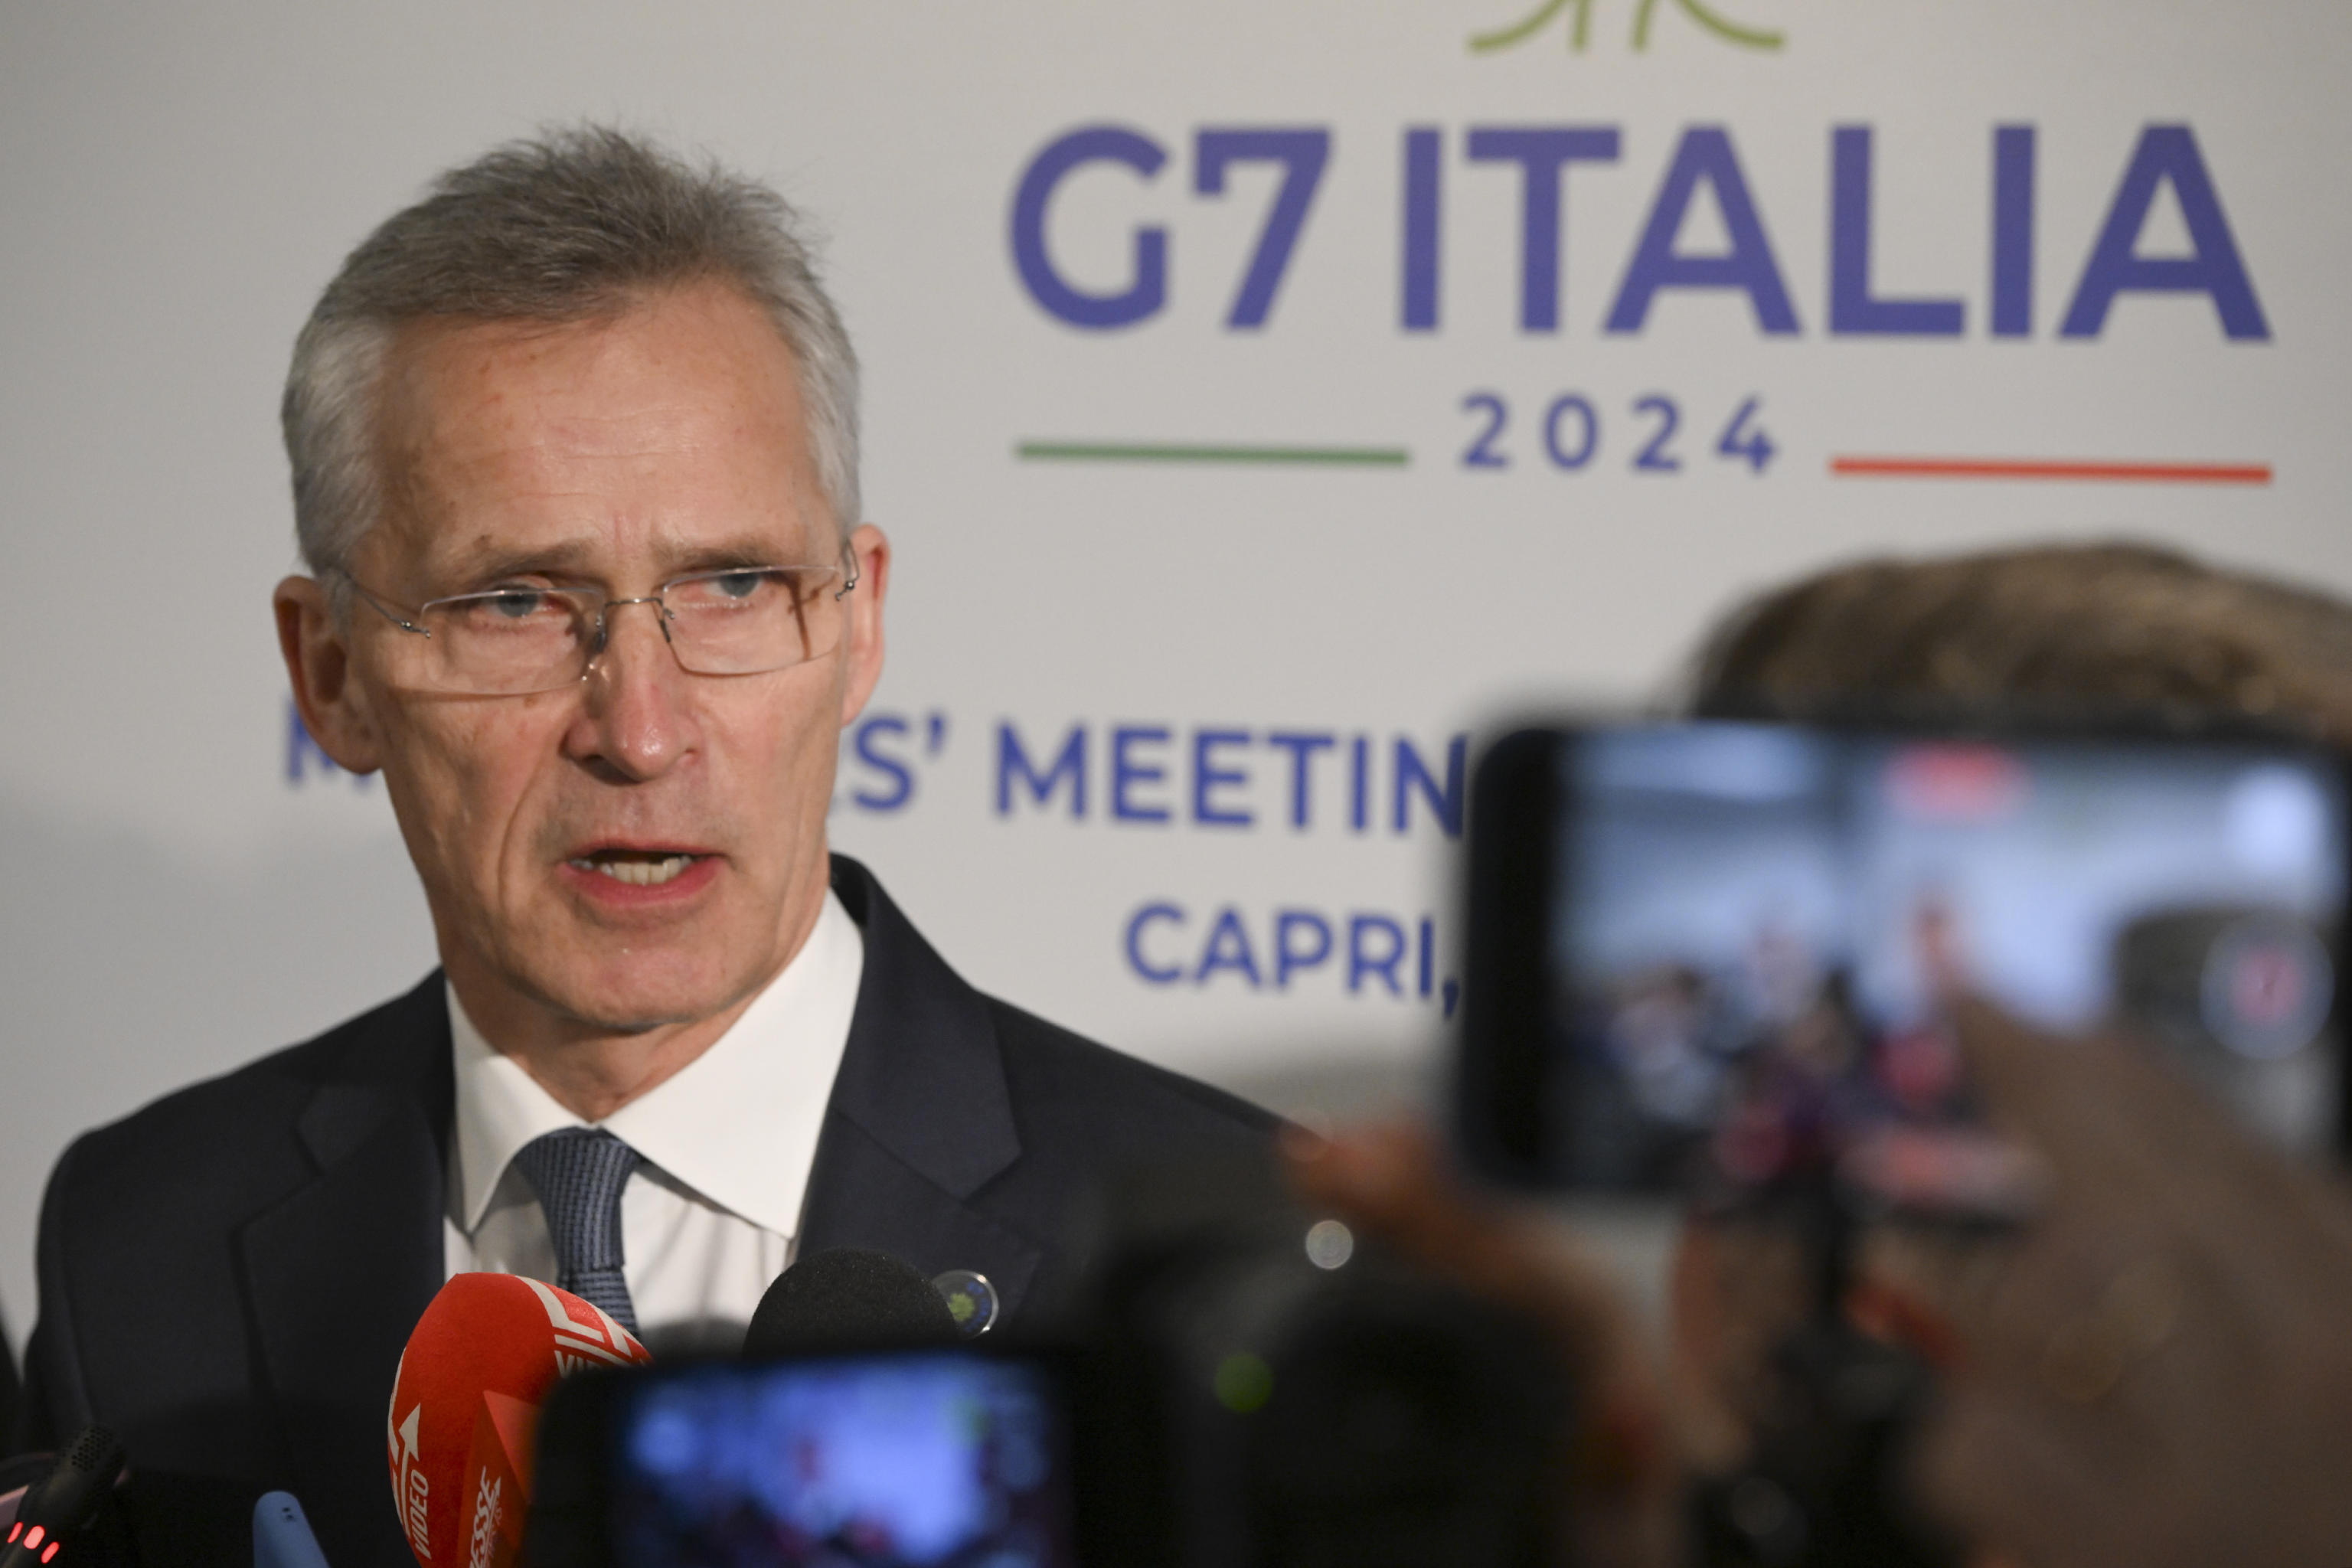 El secretario general de la OTAN, Jens Stoltenberg, el jueves en la reunin del G-7 en Capri.